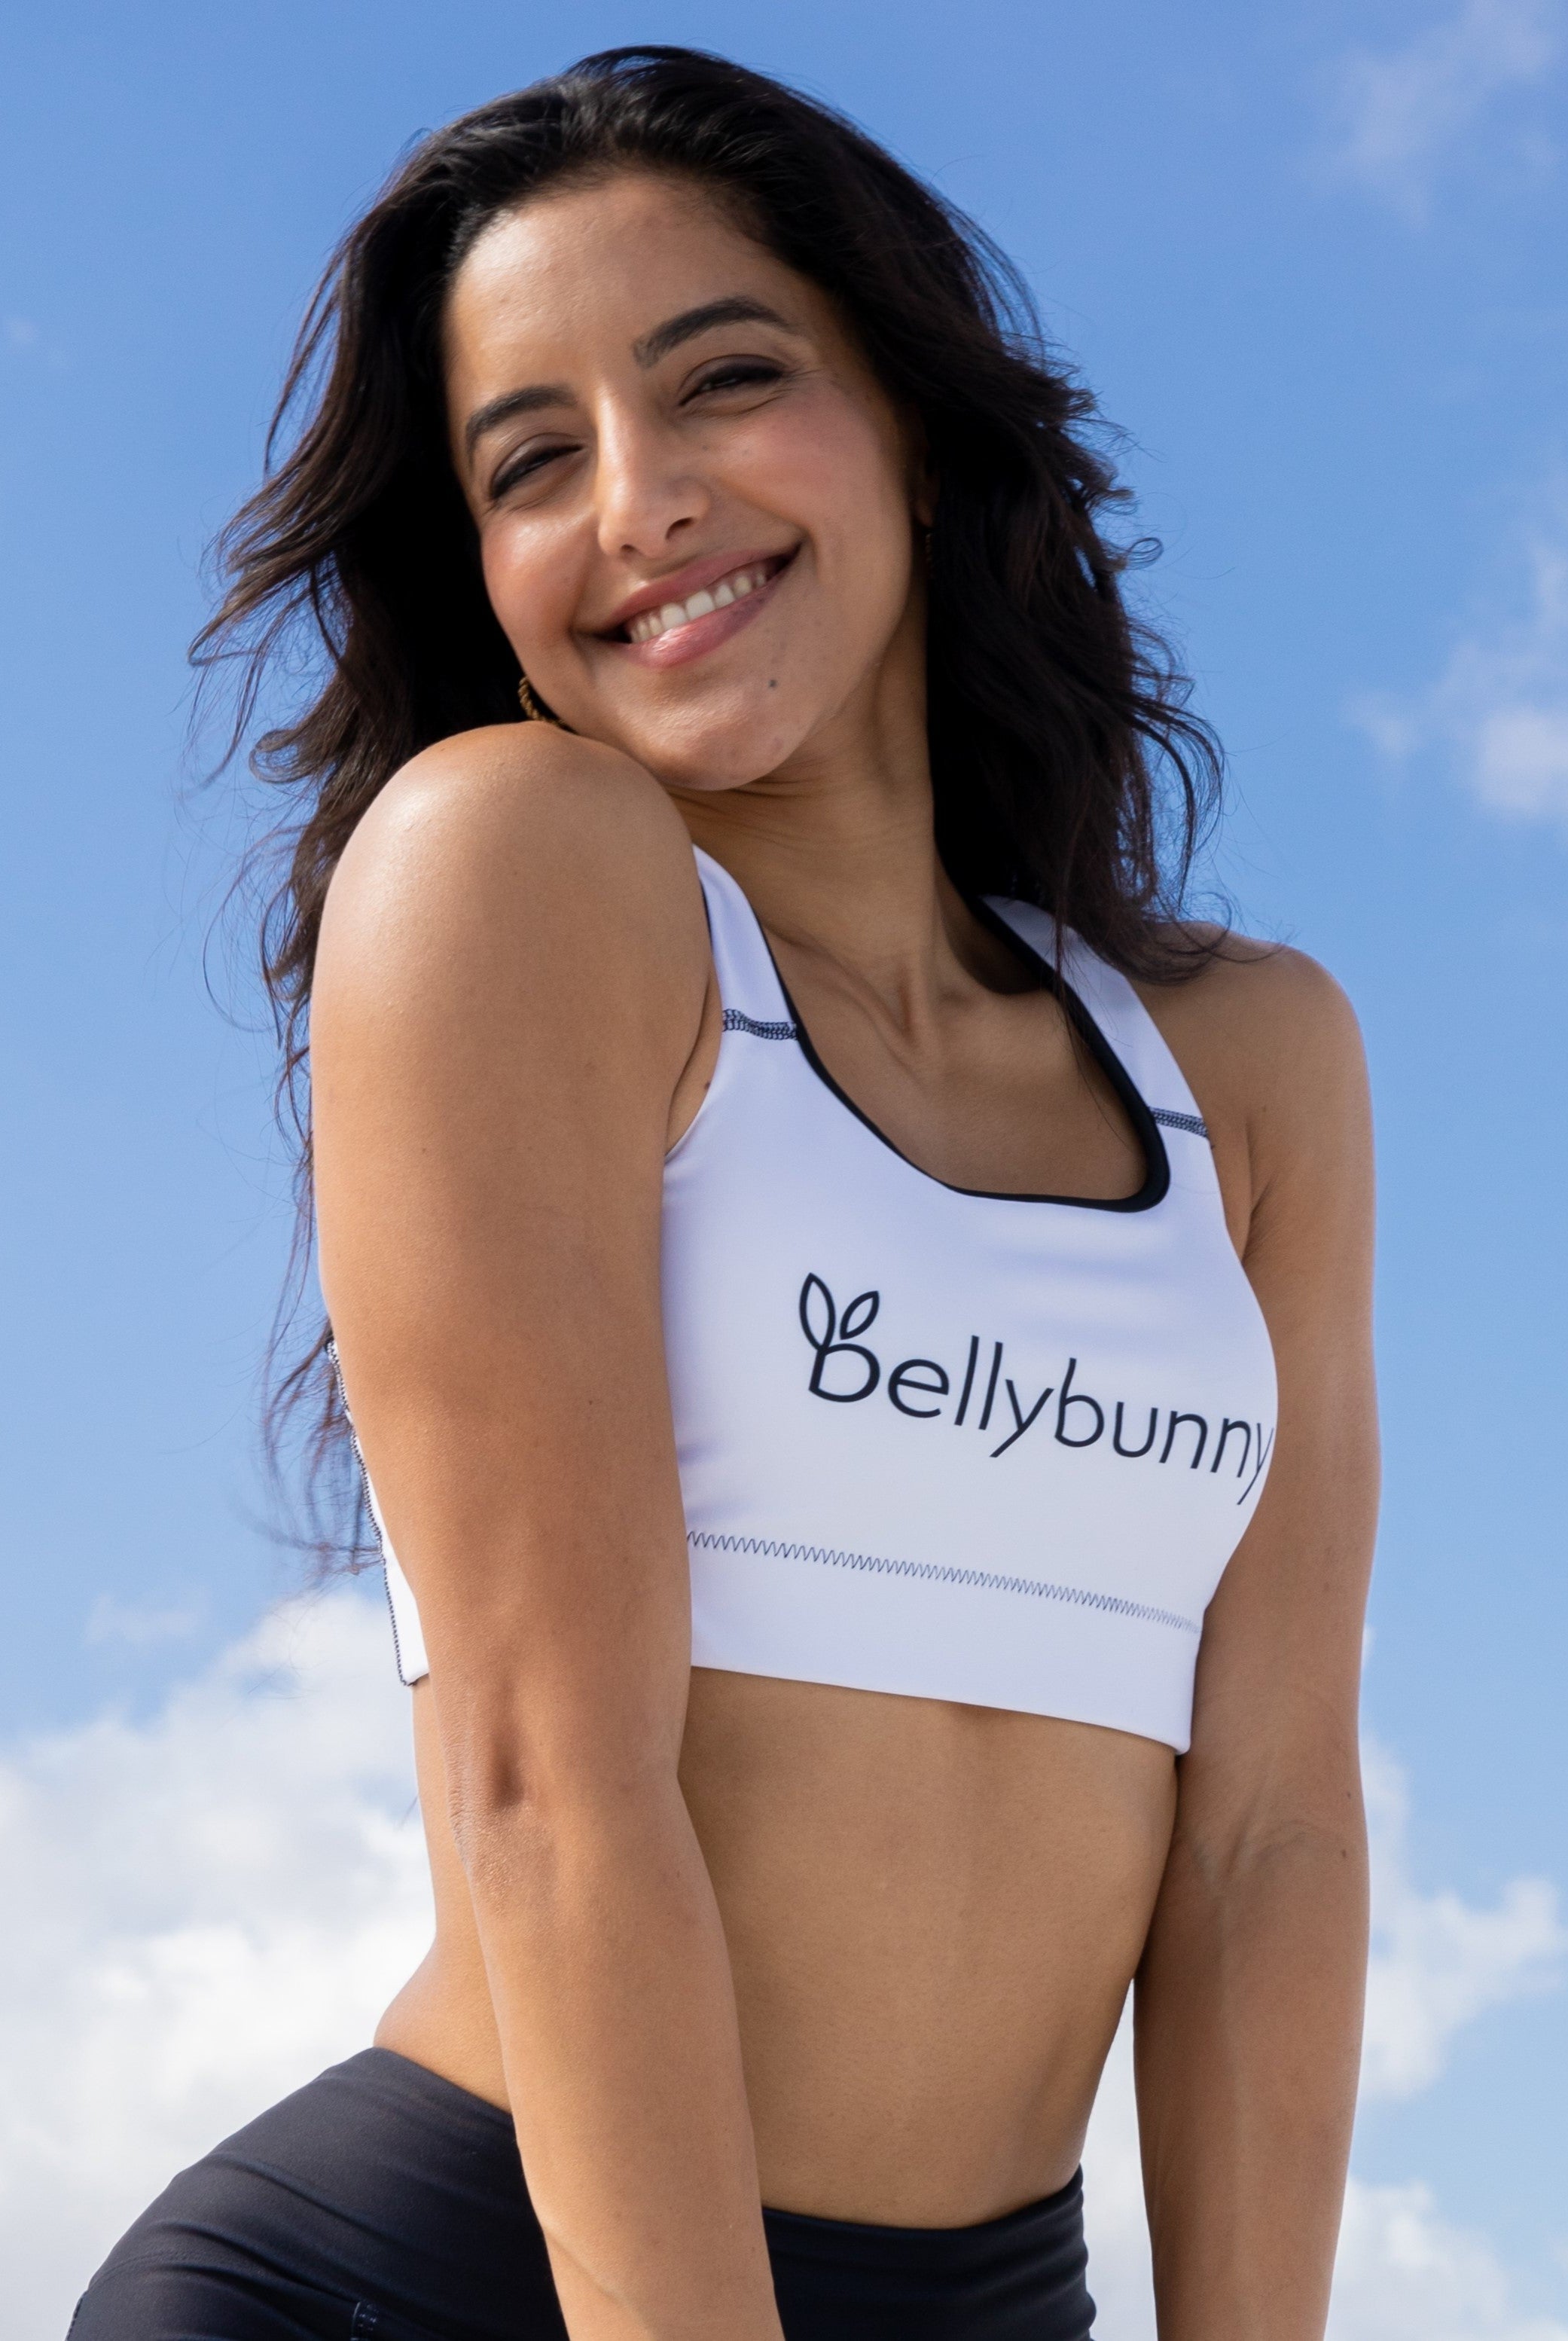 Bellybunny-Women's Sports Bra-White with black trim and black logo